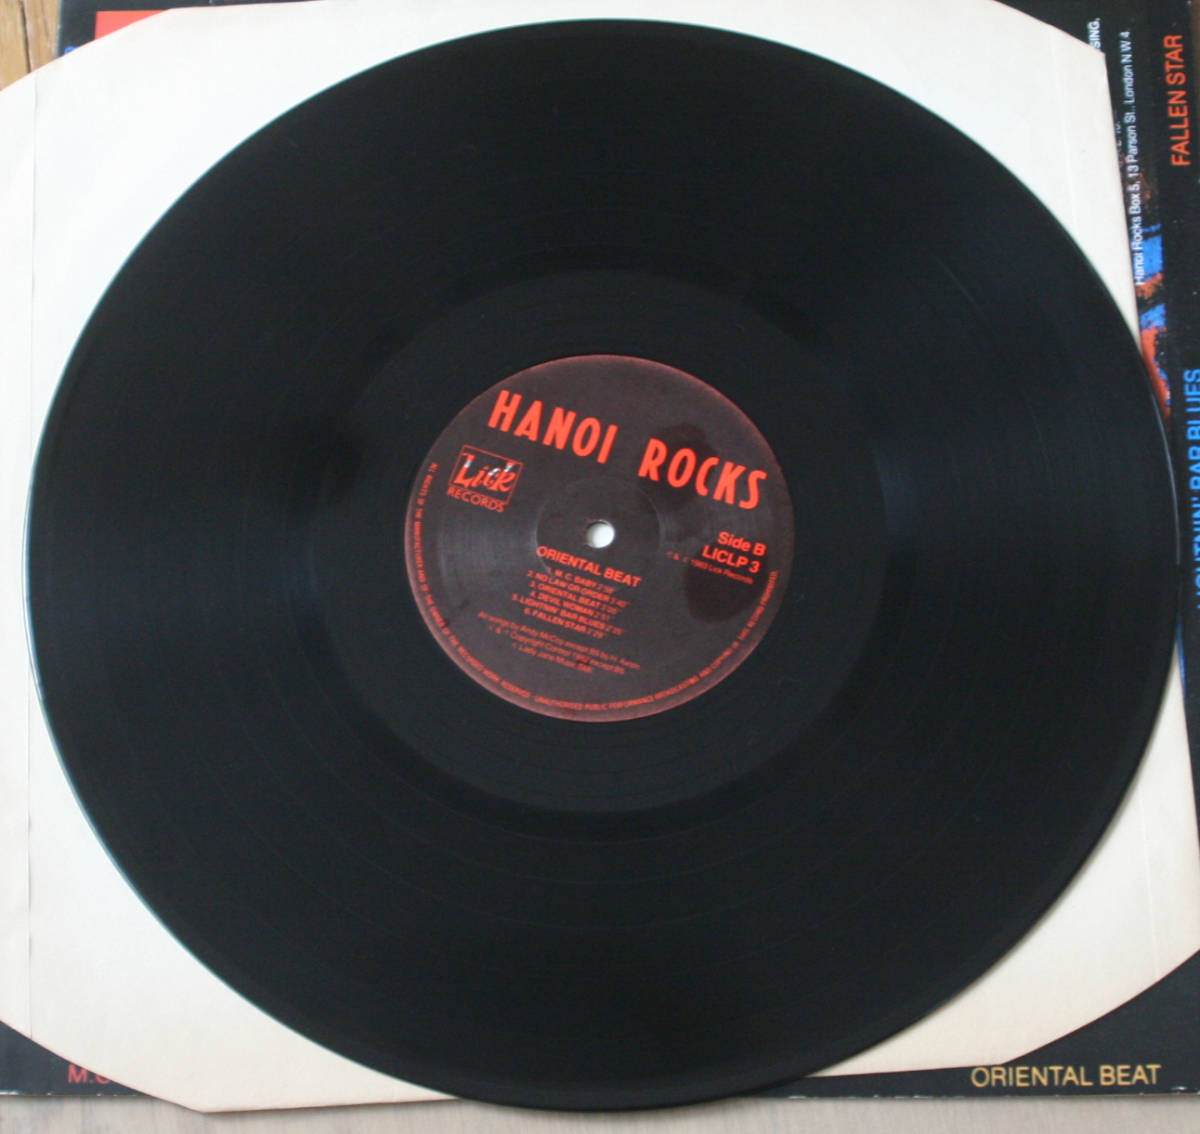 HANOI ROCKS - Oriental Beat / LP / UK盤 / ハノイロックス, Glam, Punk, グラム, パンク _画像5